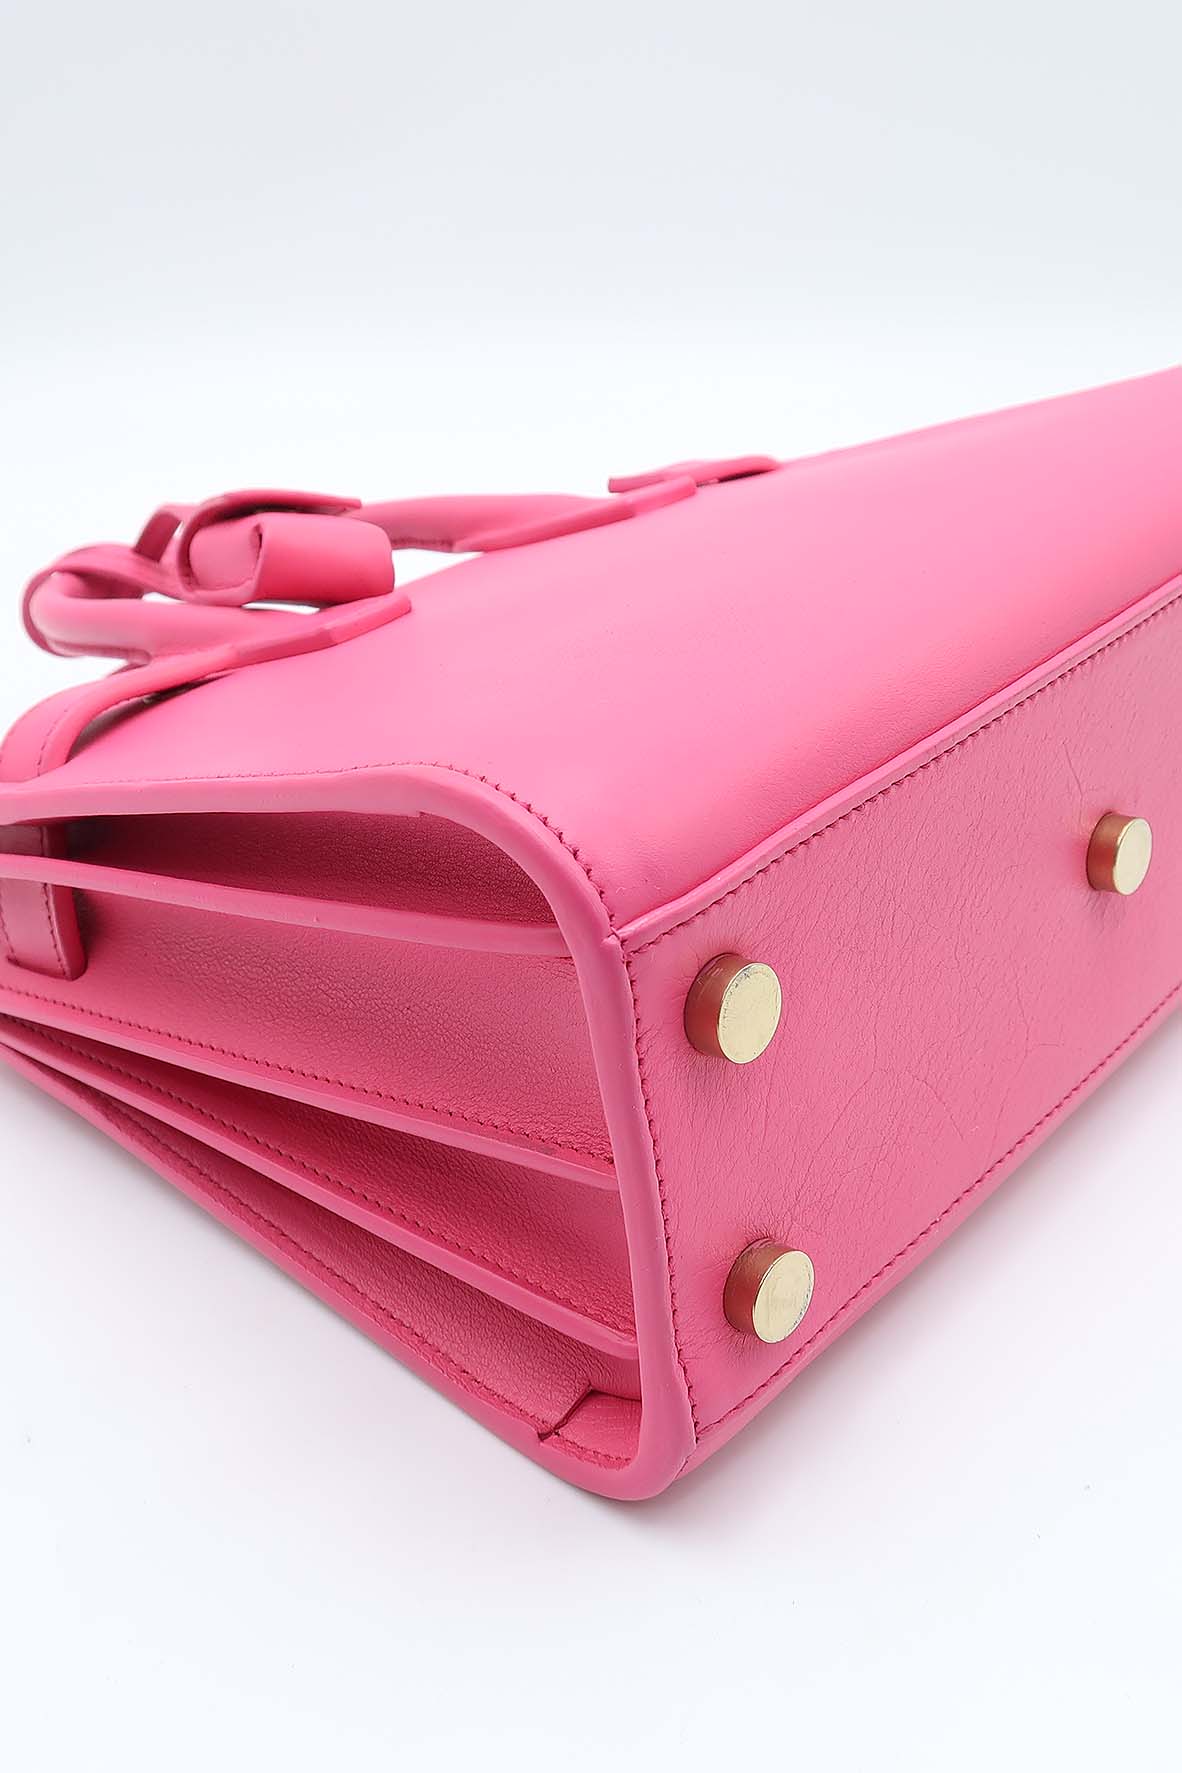 Saint Laurent Nano Sac de Jour - Pink Totes, Handbags - SNT21886